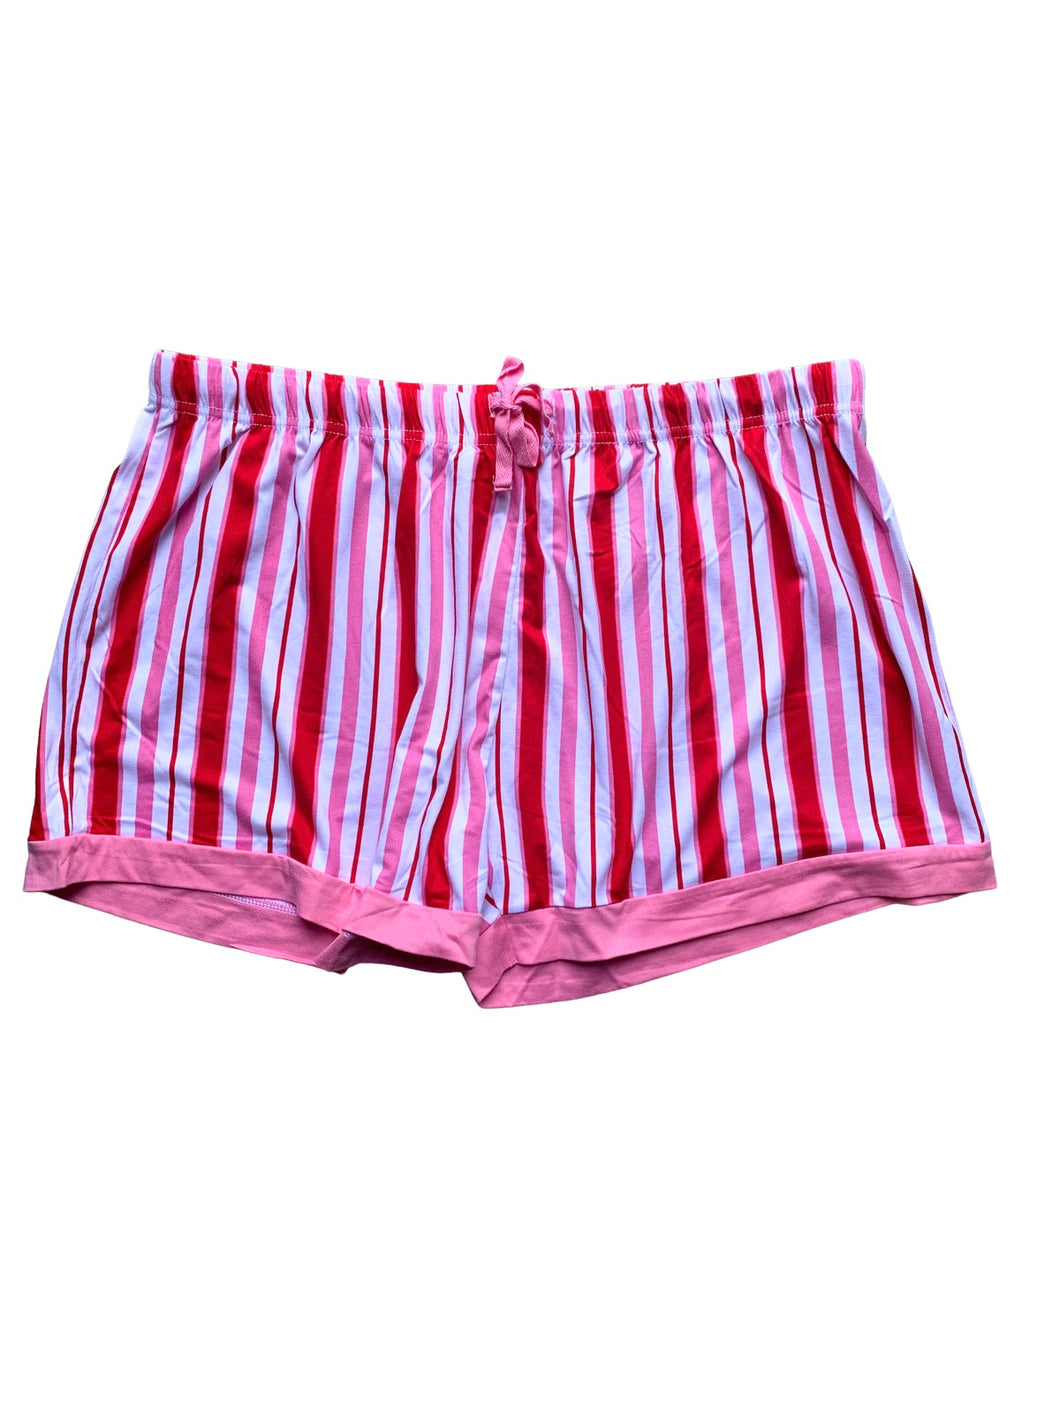 pink stripe pj SHORT for WOMEN